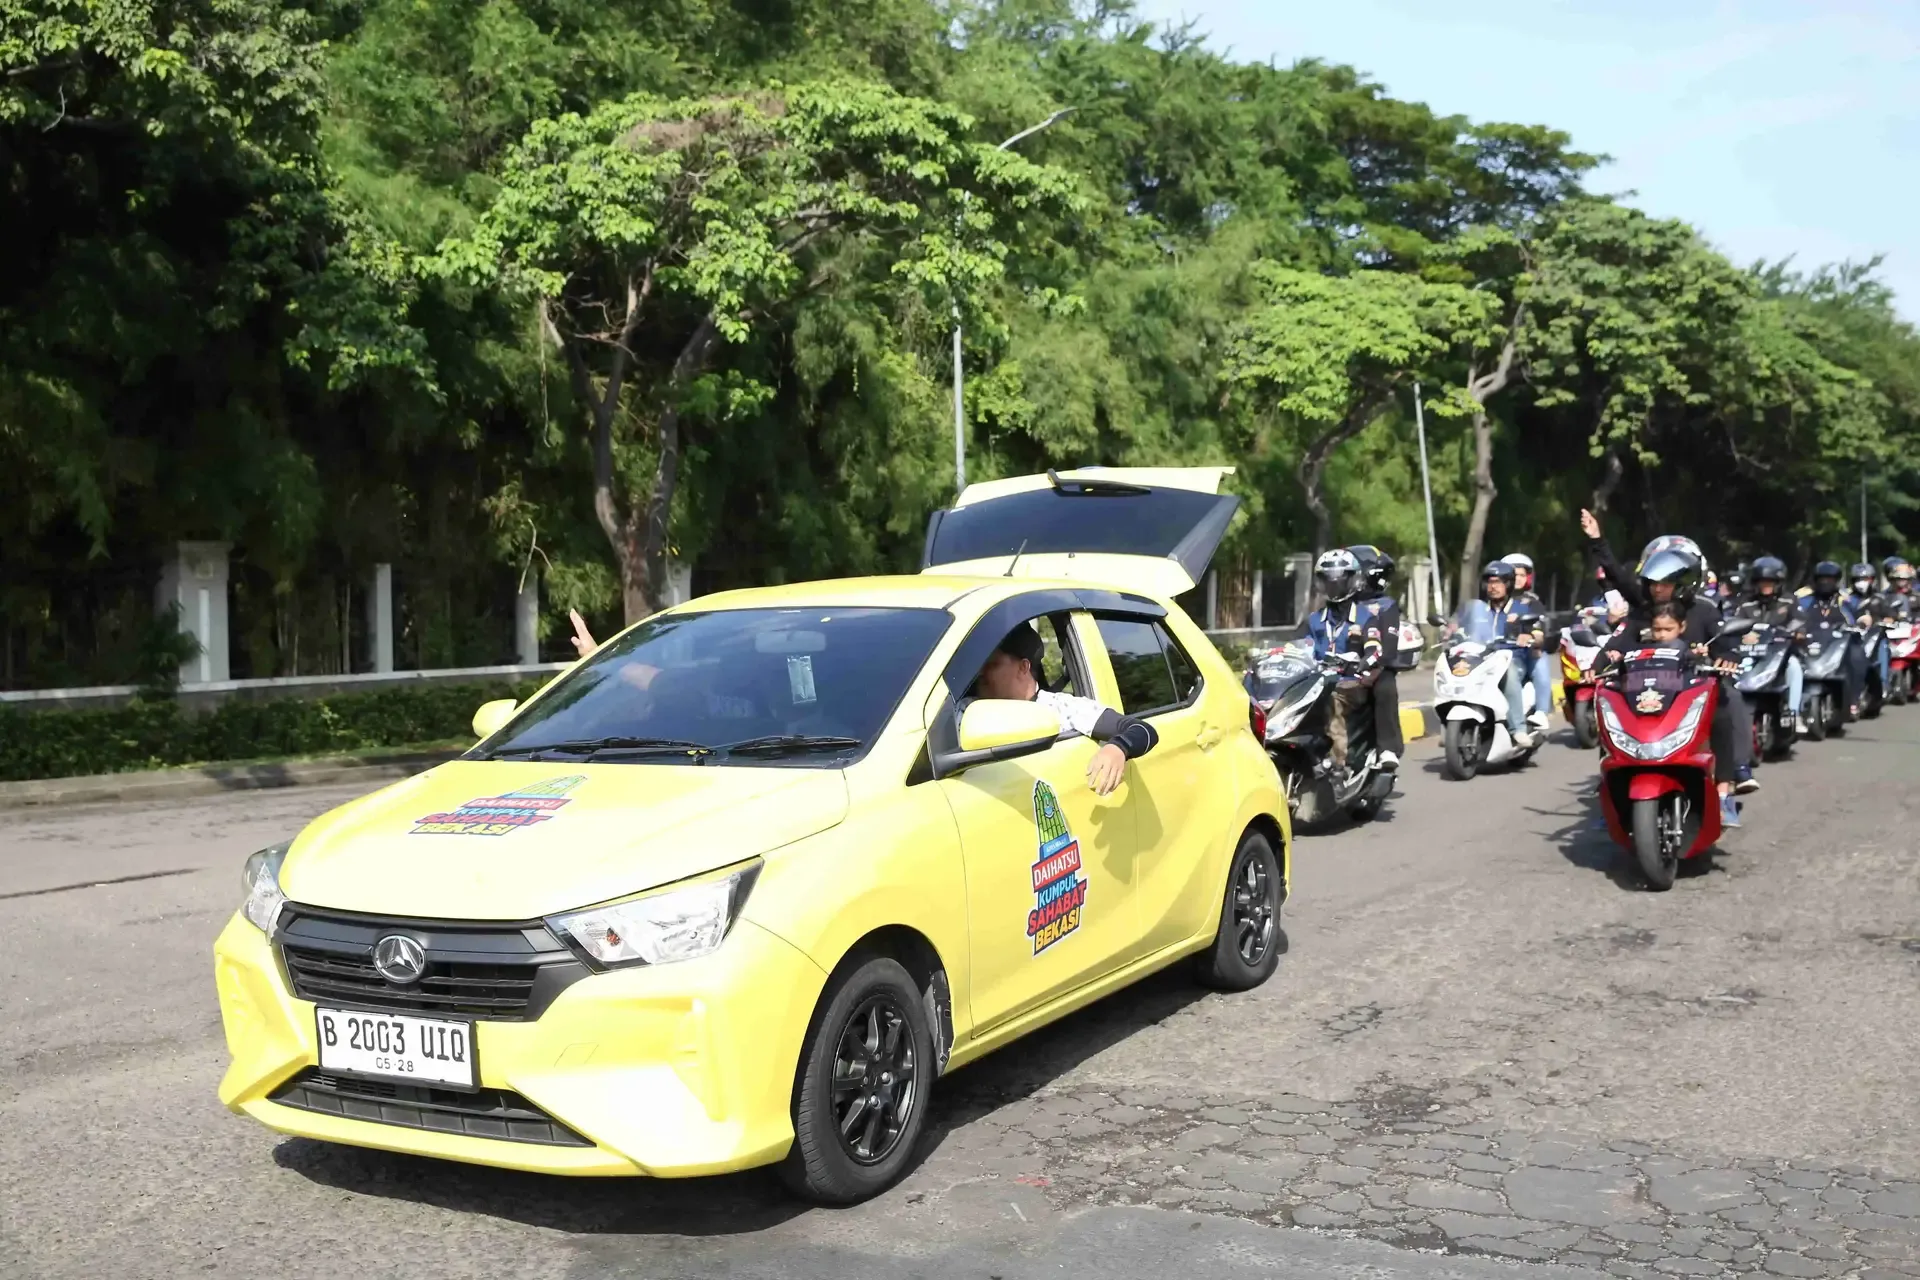 Aktivitas Olling Thunder Antara Komunitas Daihatsu Dan Pengendara Sepeda Motor Pada Salah Satu Acara Daihatsu Kumpul Sahabat